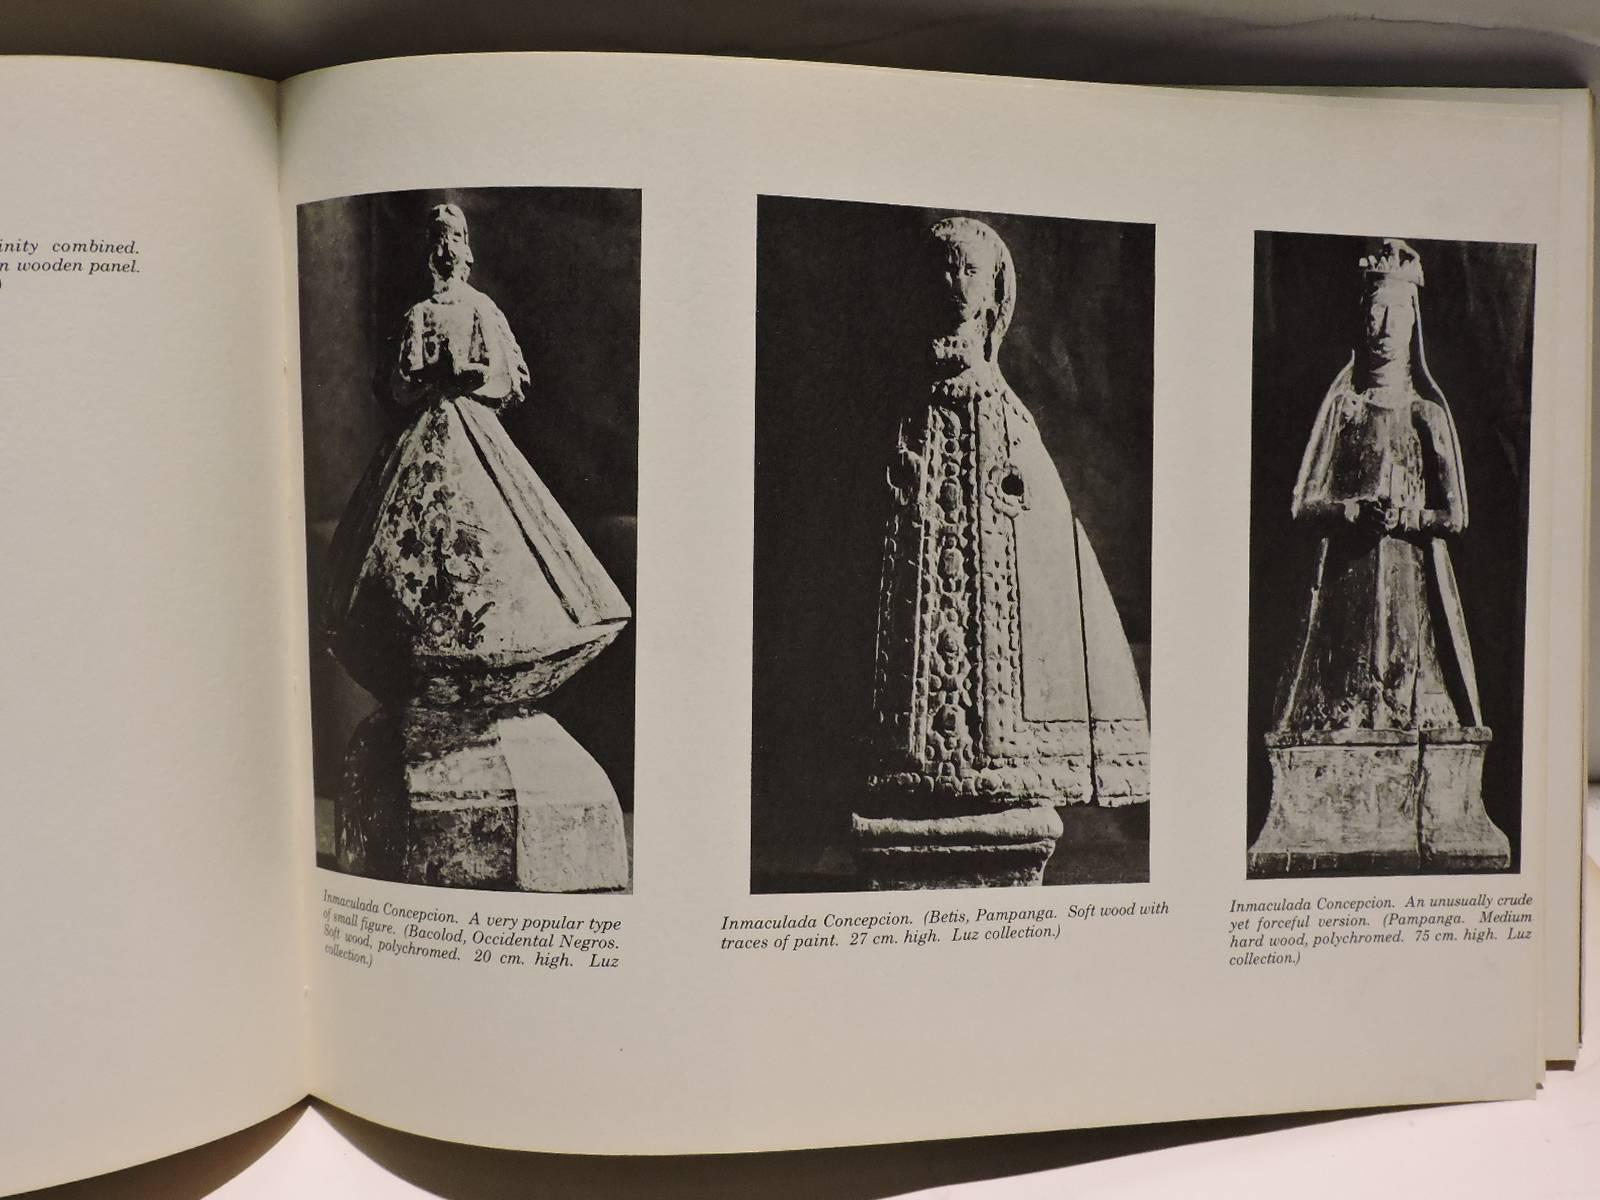 Philippine Religious Imagery, Fernando Zobel De Ayala - 1st Edition - 1963 2